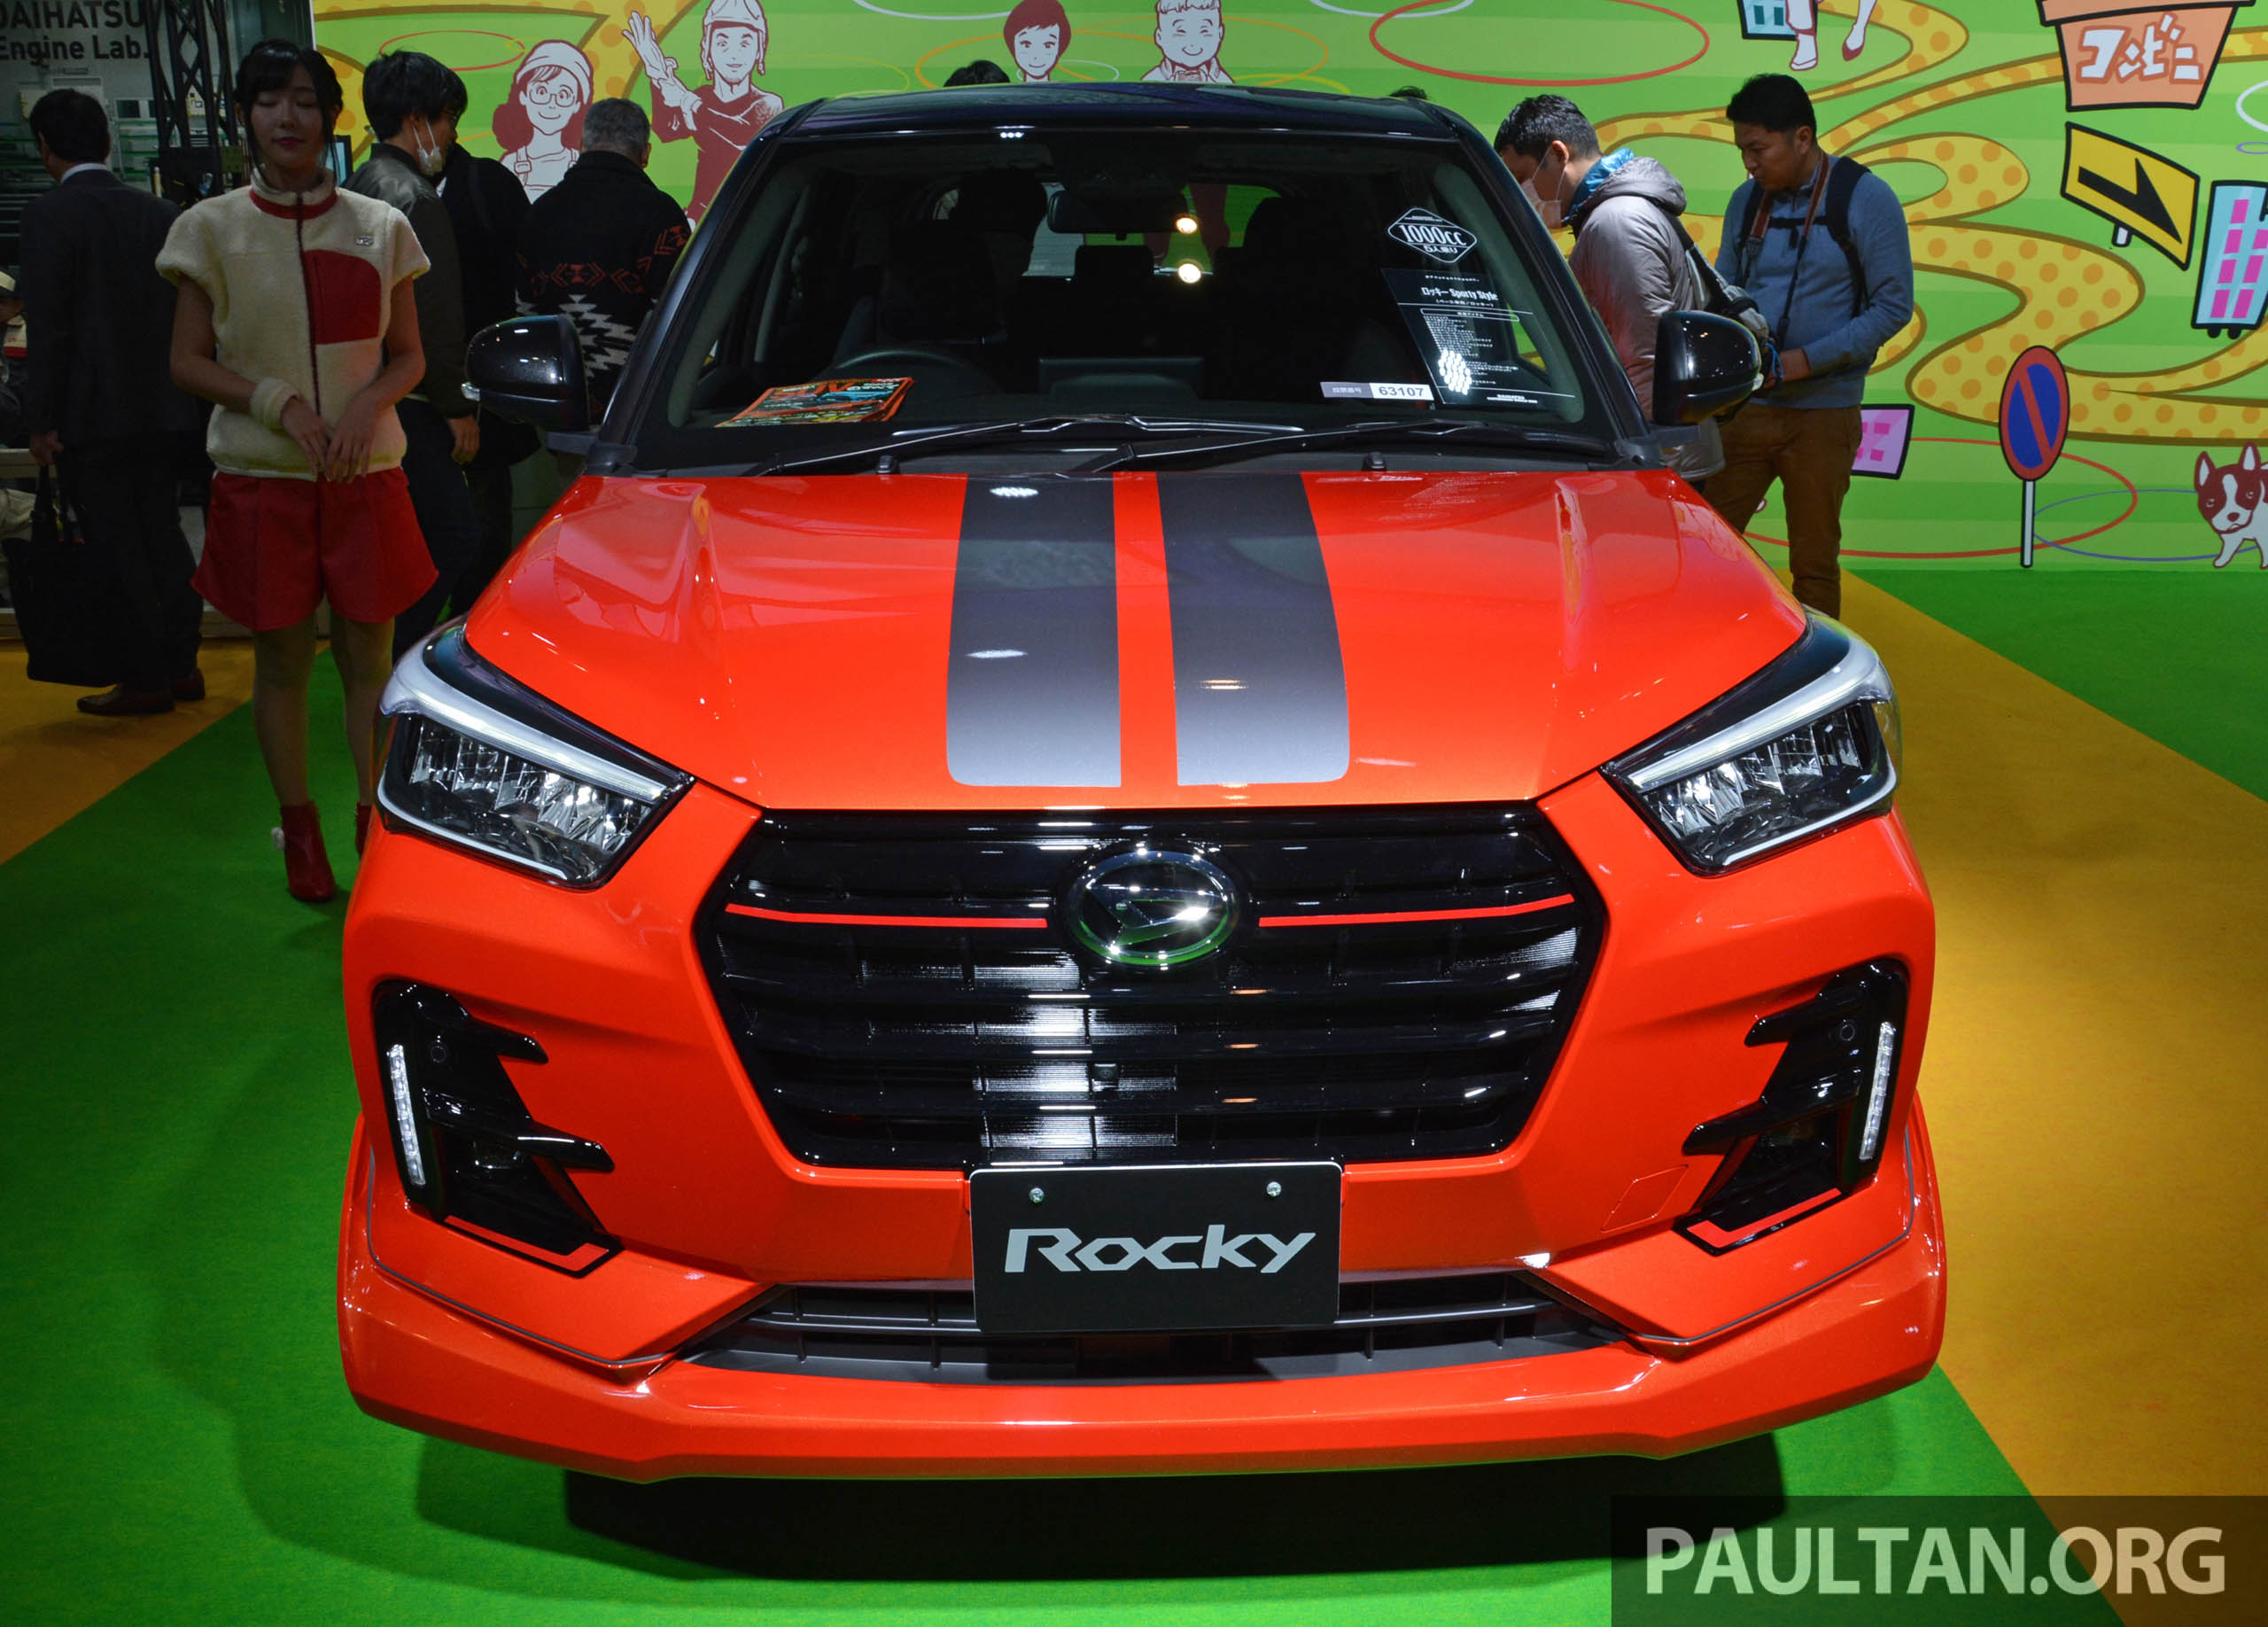 Daihatsu Rocky Sporty Style Bm Paul Tan S Automotive News